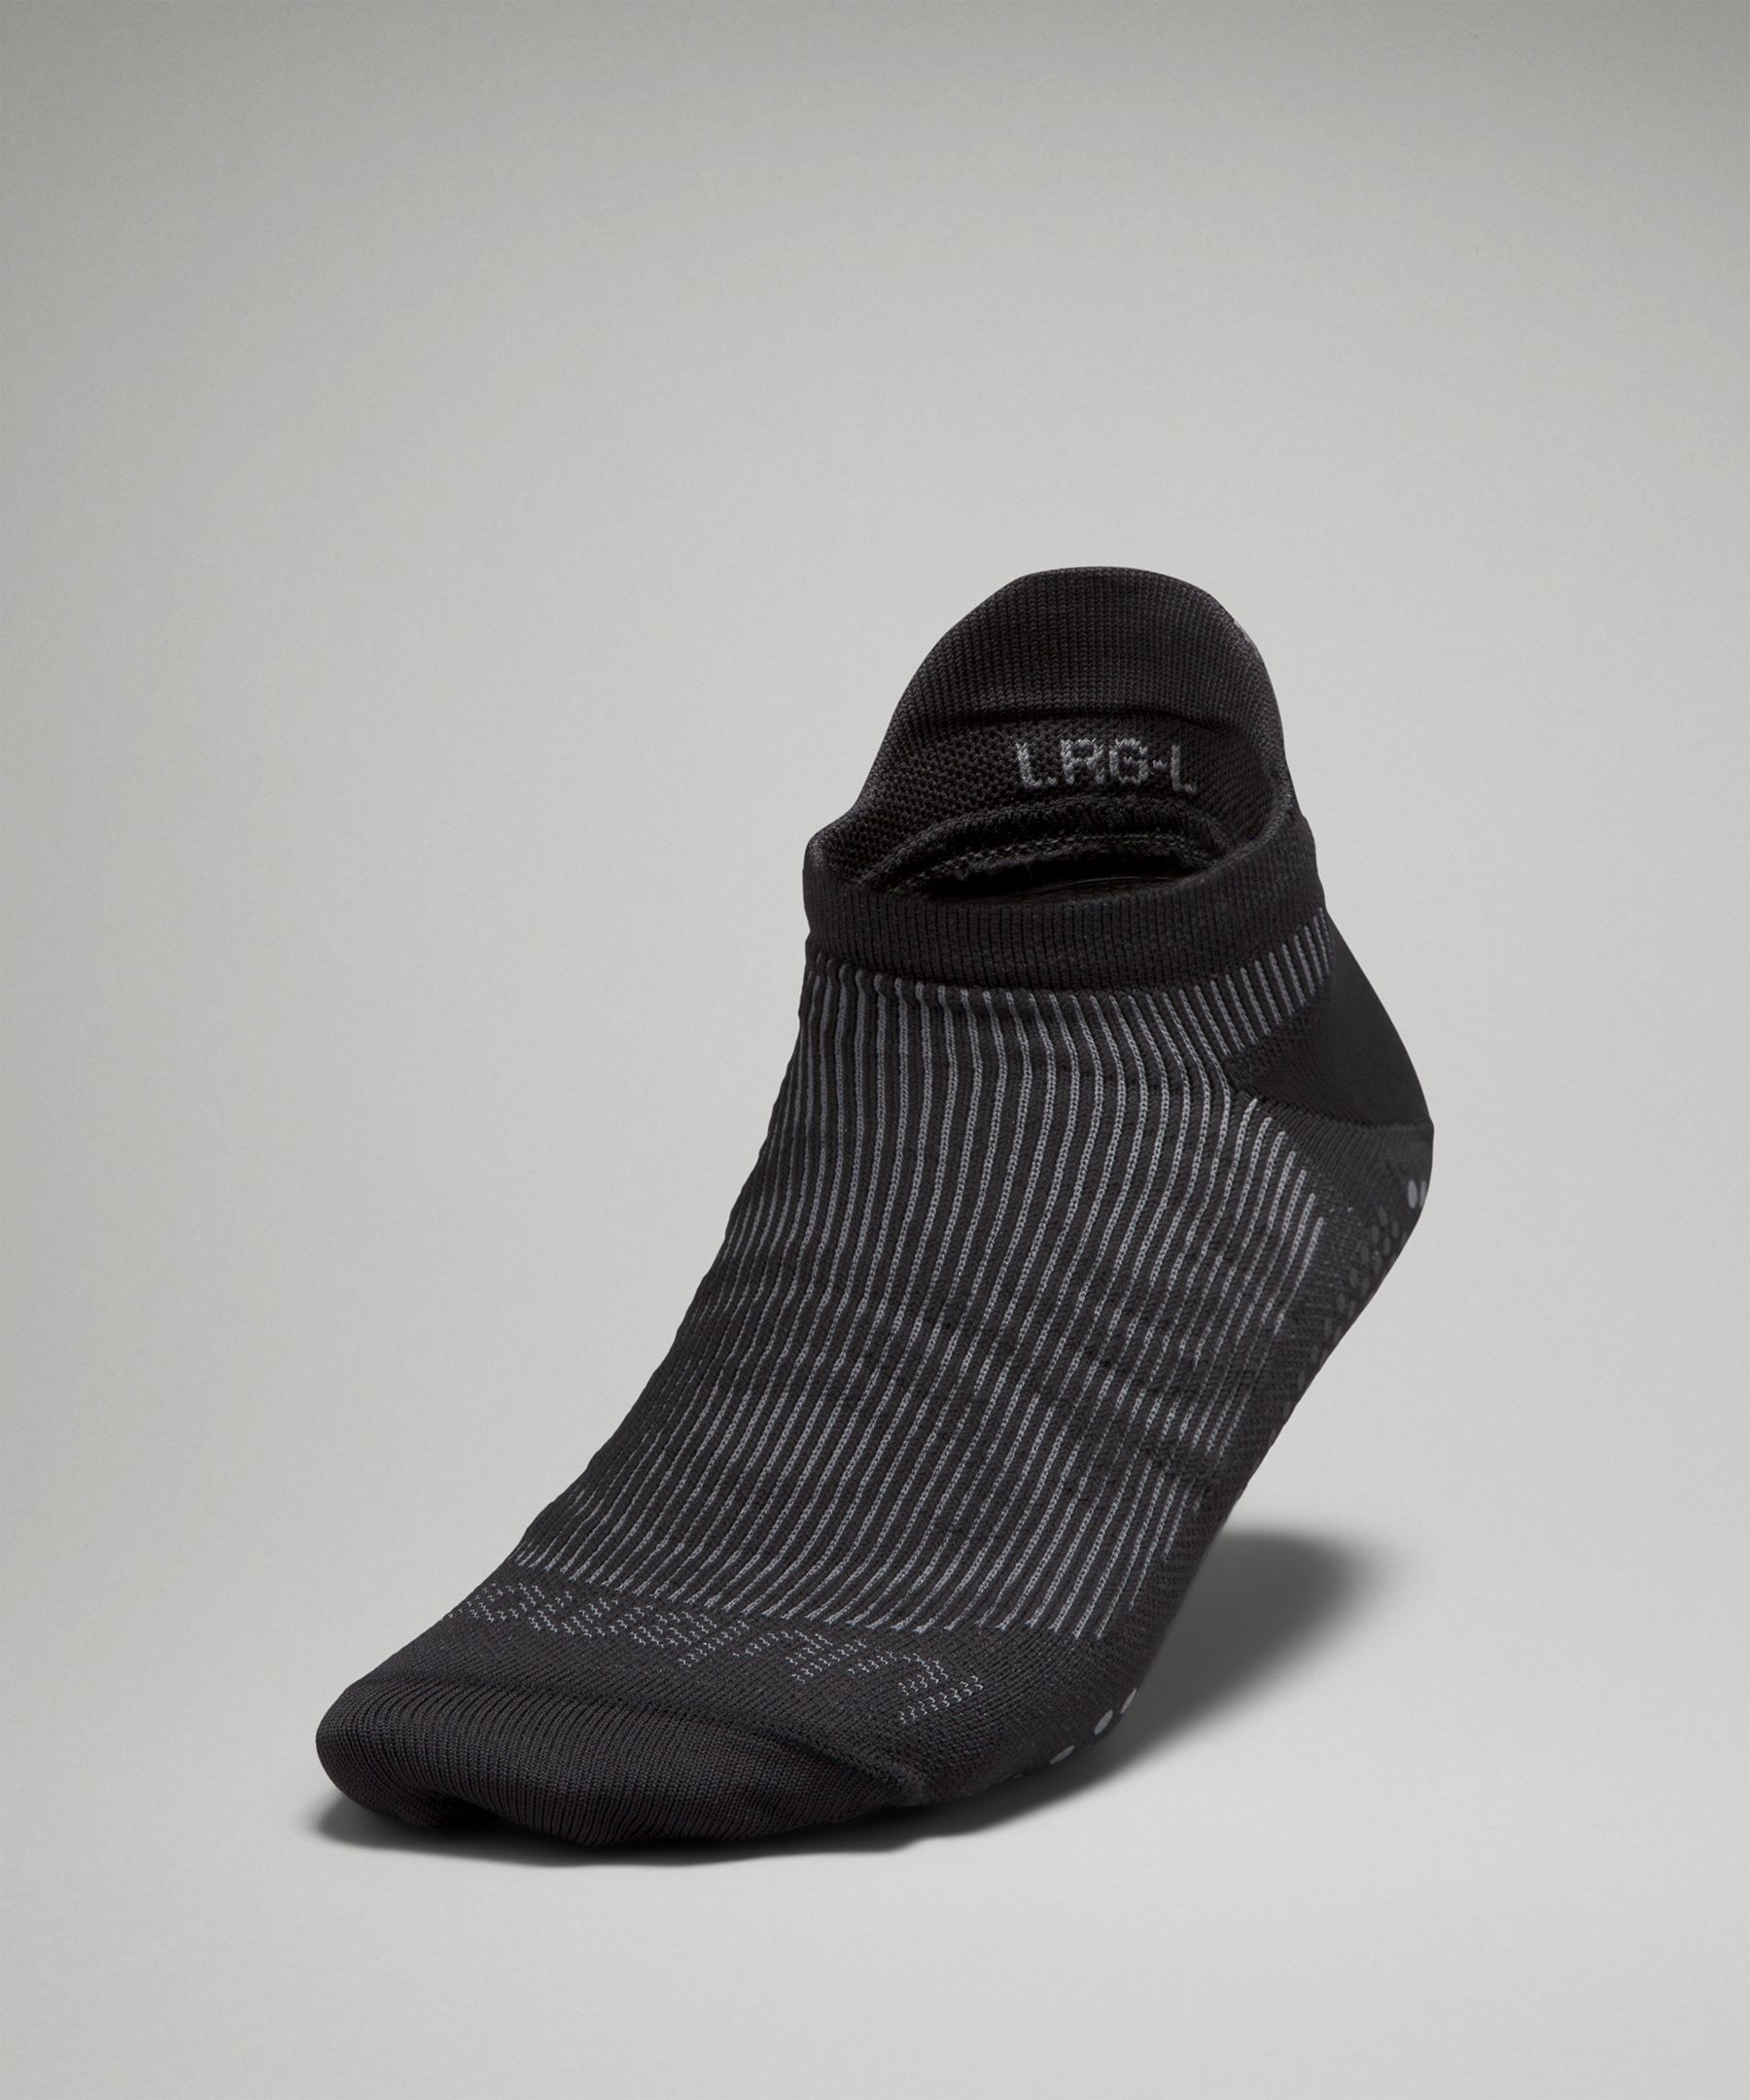 Five-Toe Pilates Socks for Women Non-Slip Grip Yoga Socks Ideal for Pilates  - China Pilales Socks and Yoga Sock price